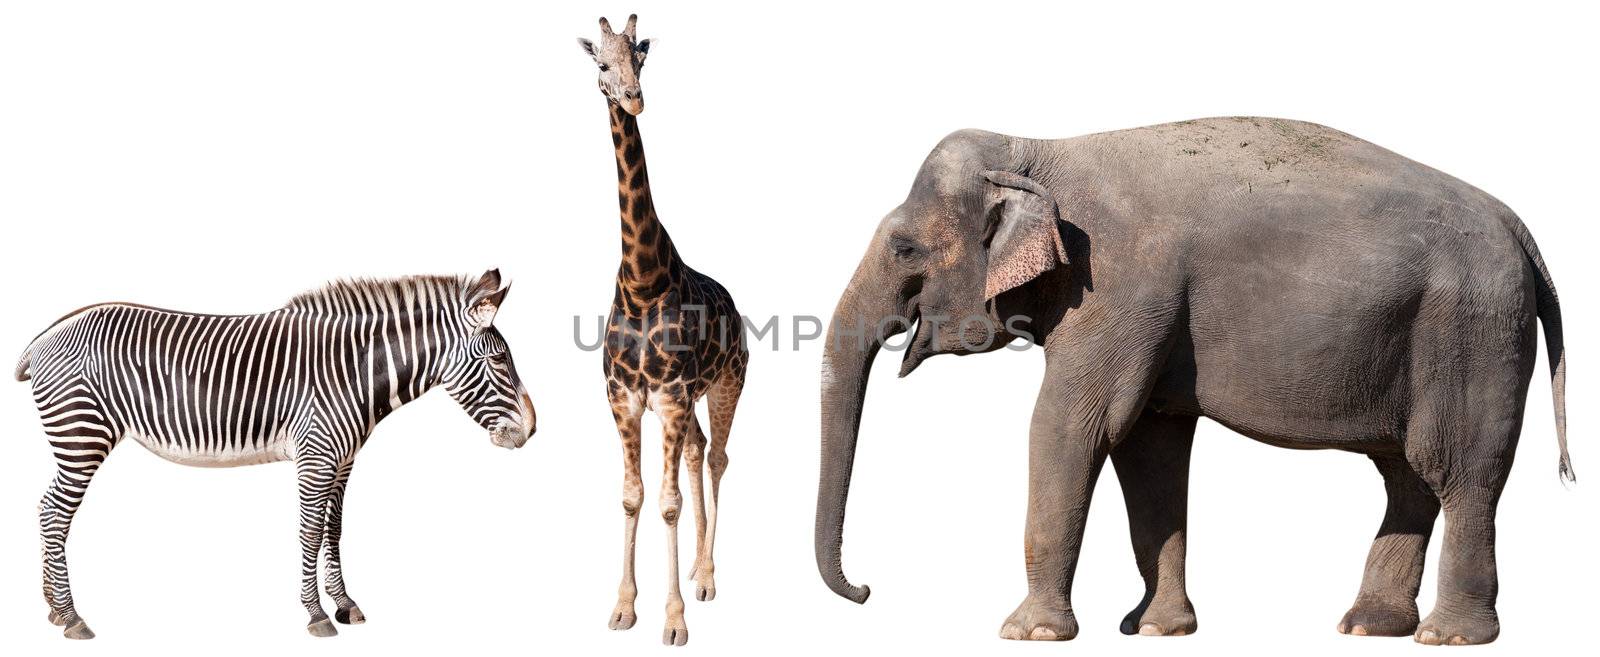 Zebra, Giraffe and Elephant by jamdesign